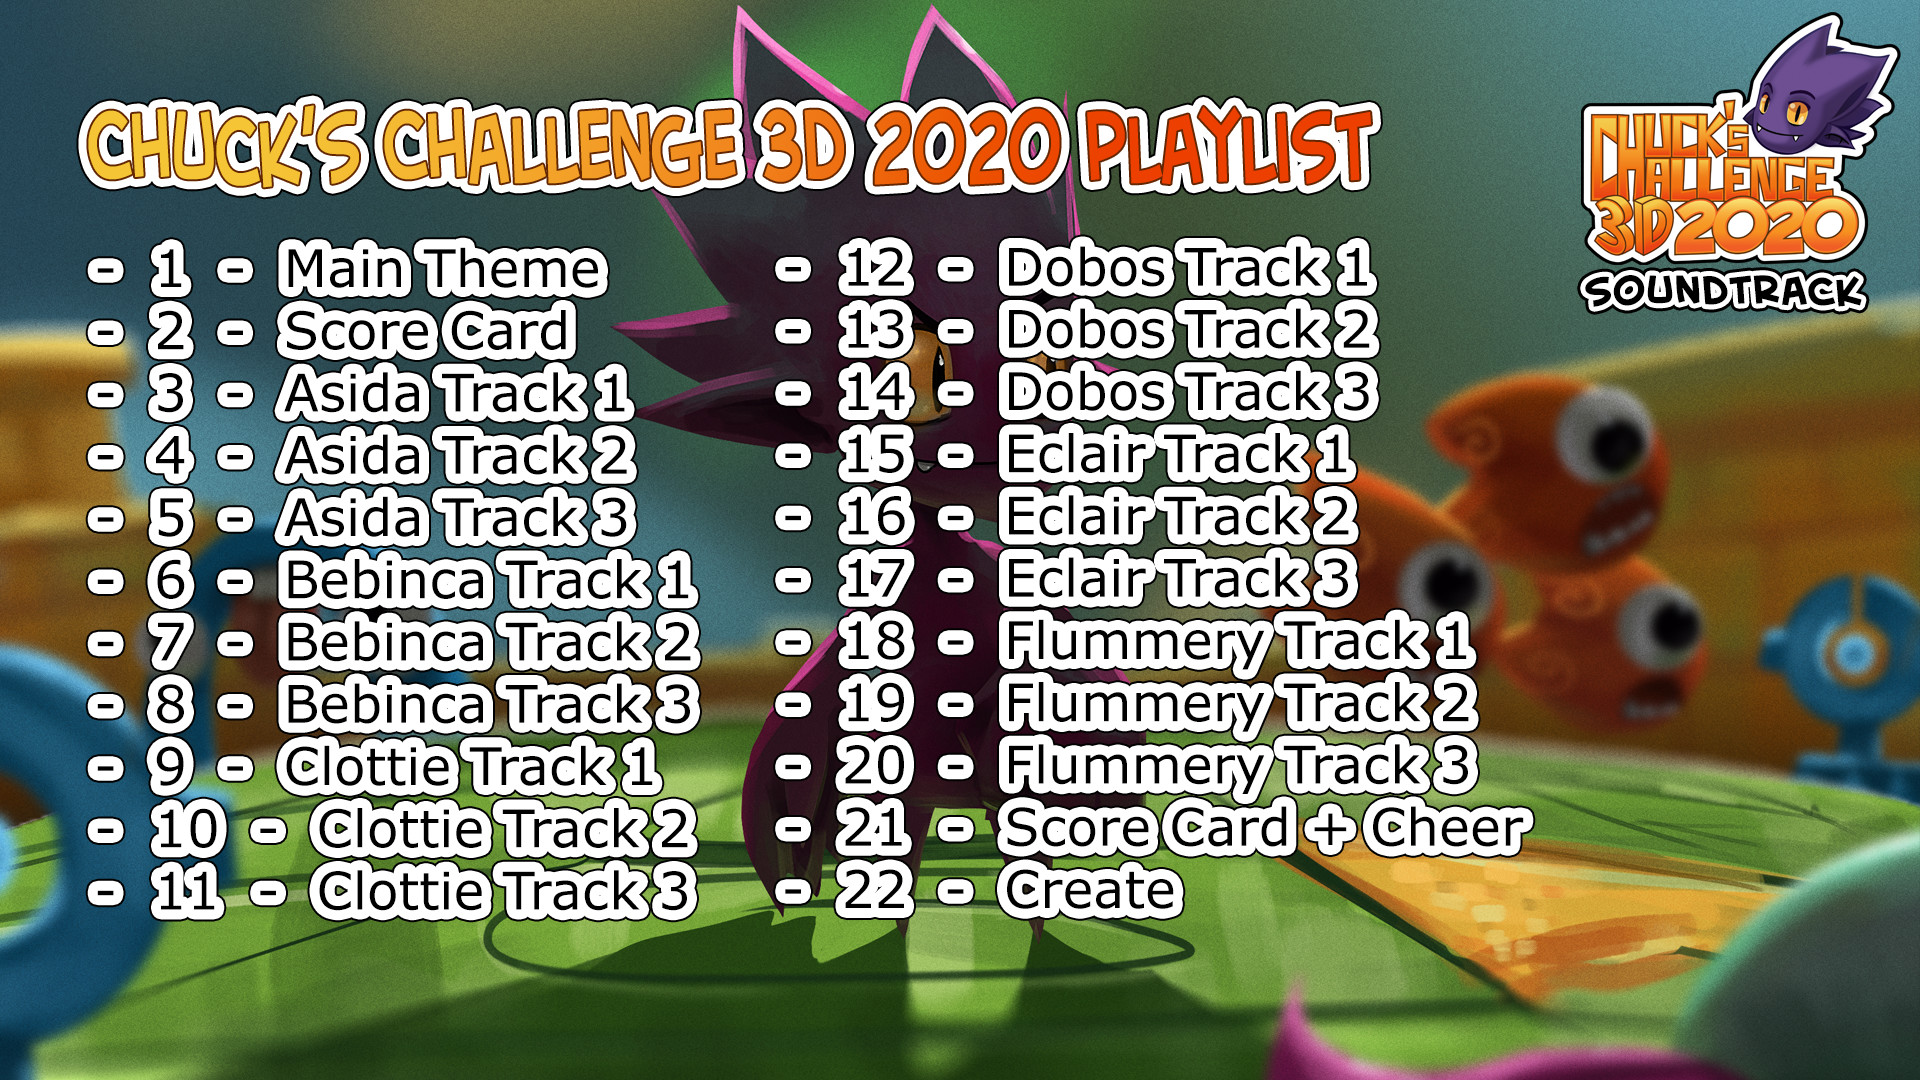 Chuck's Challenge 3D 2020 - Soundtrack Featured Screenshot #1